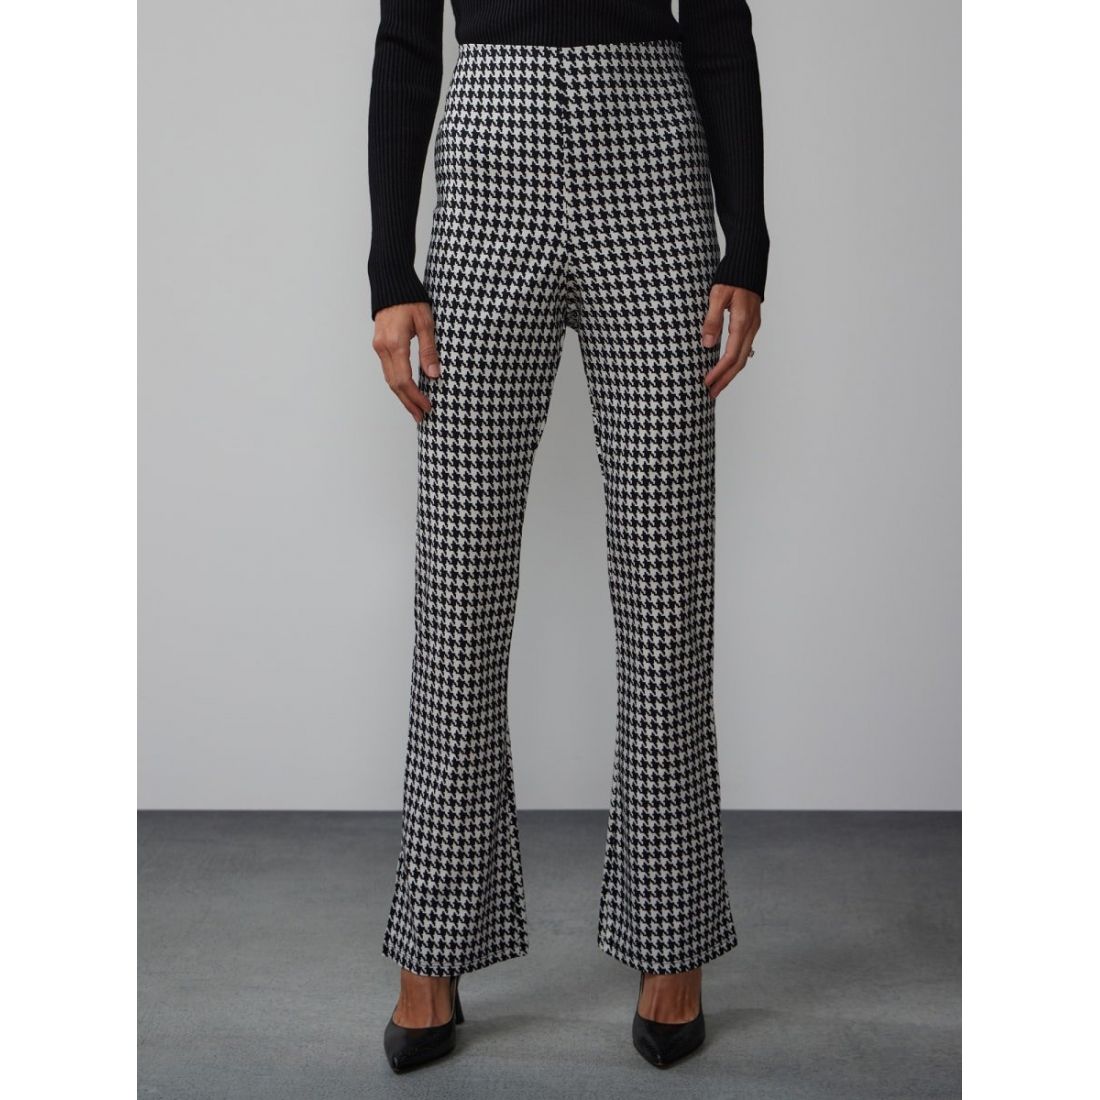 New York & Company - Pantalon 'Plaid Bootcut' pour Femmes